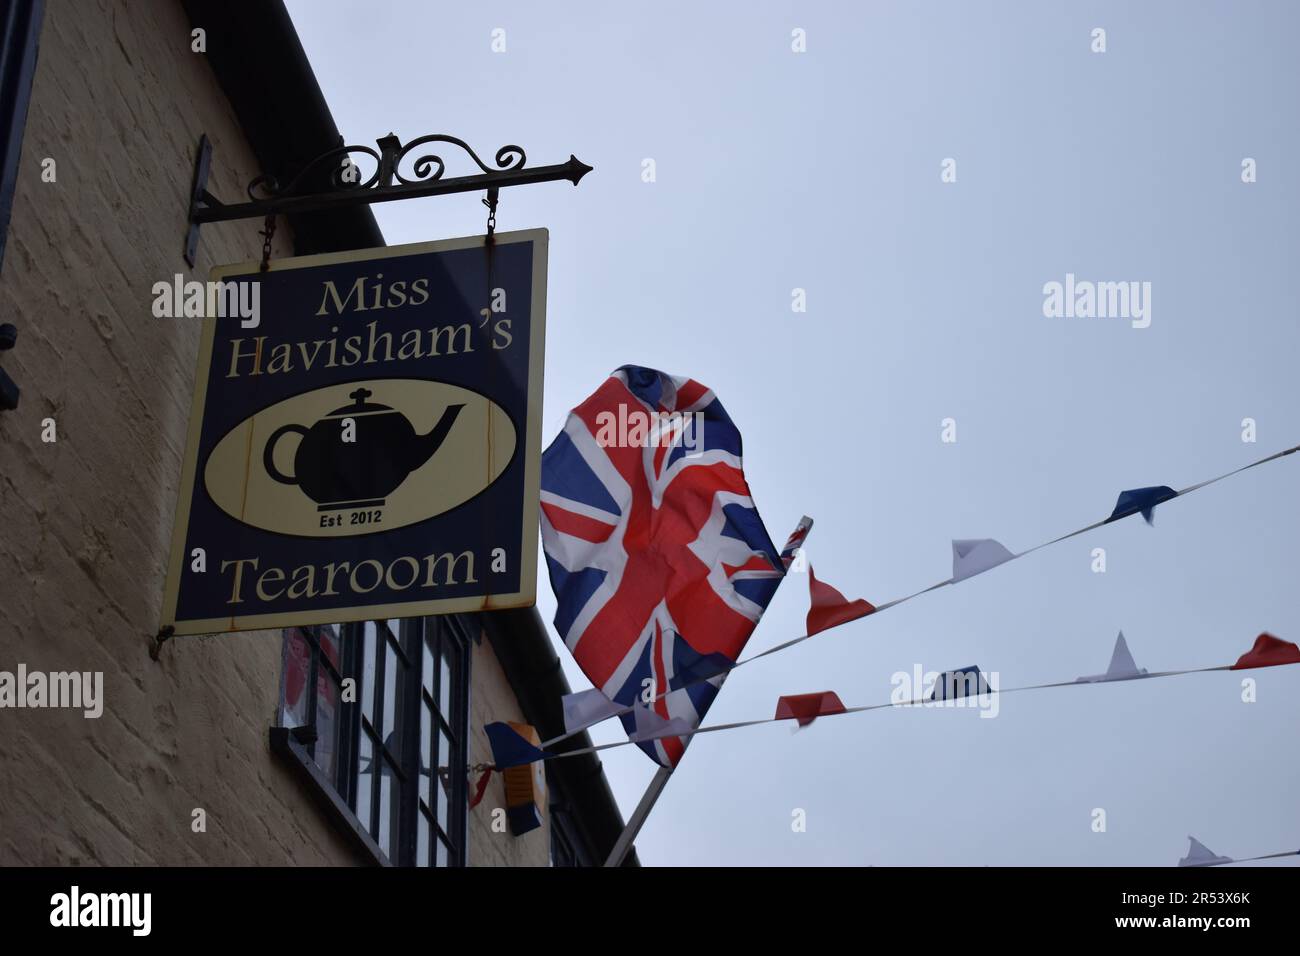 Sign for Miss Havisham's Tea Room in Stony Stratford, with Union Jack and bunting. Stock Photo